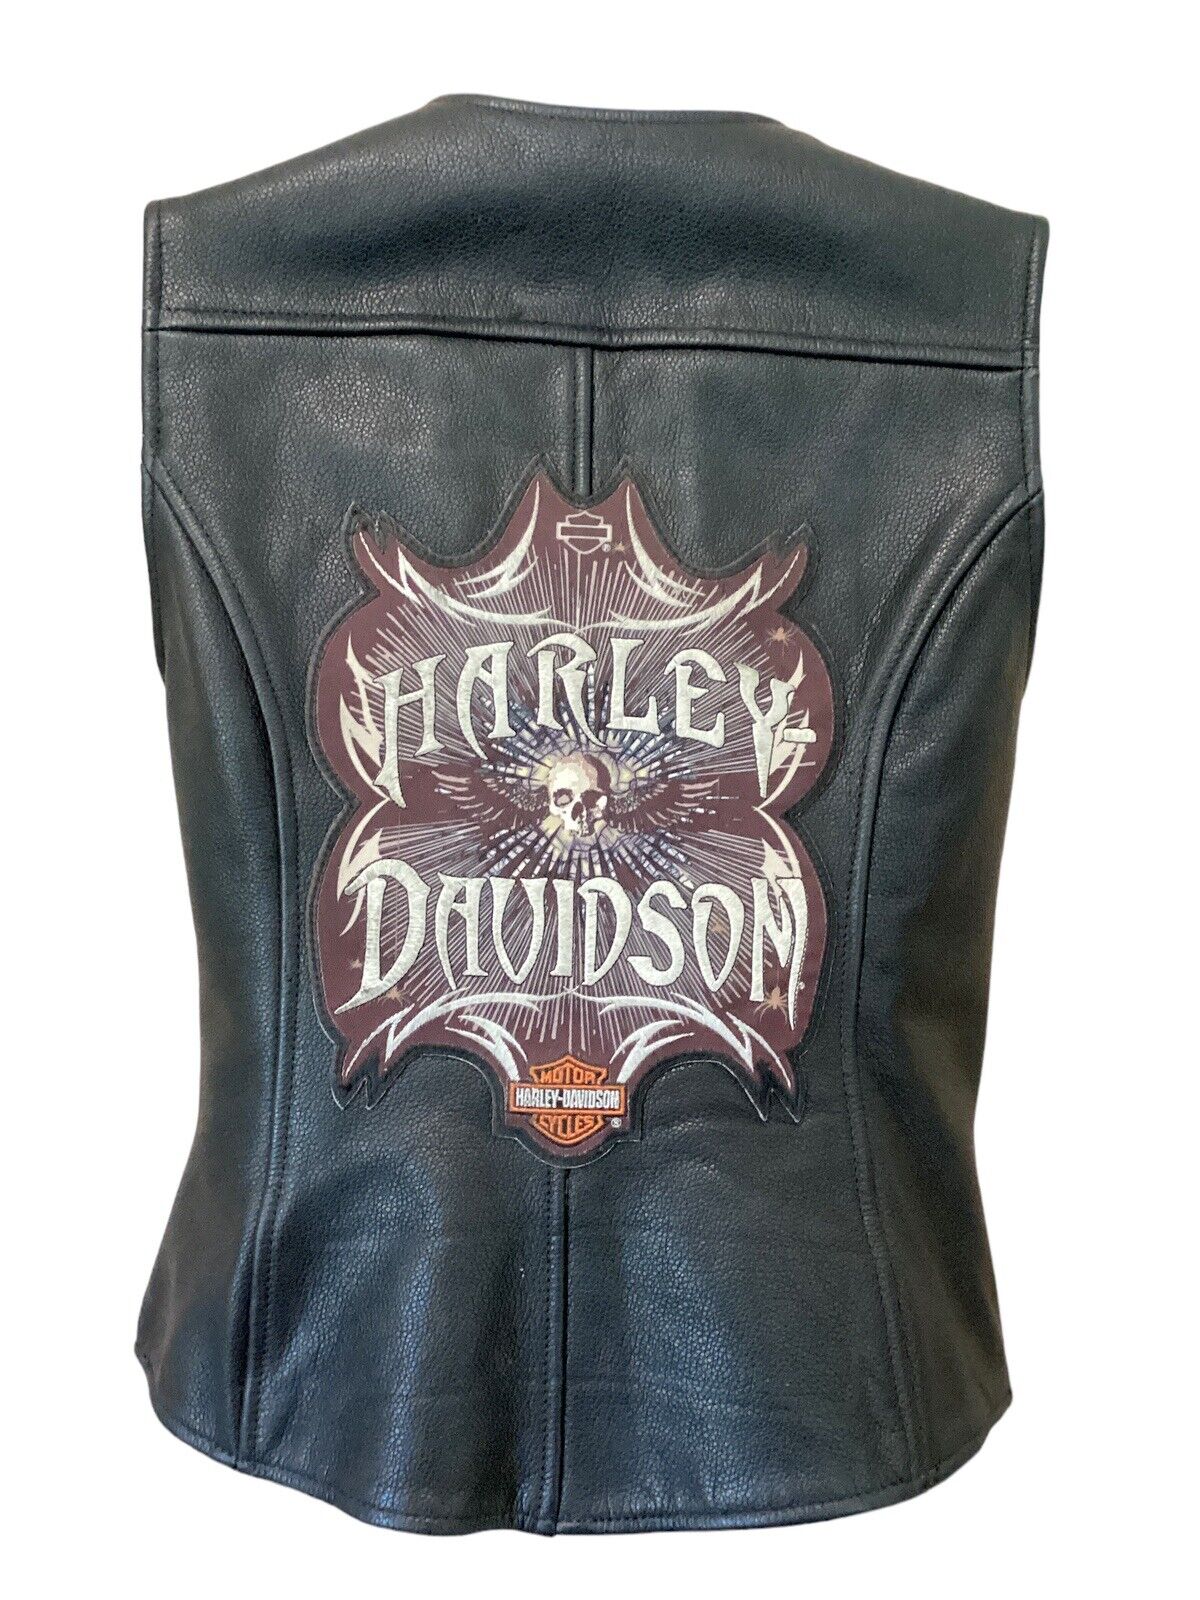 Vintage Harley Davidson Women’s Biker Vest Size XS Black Leather With Patches